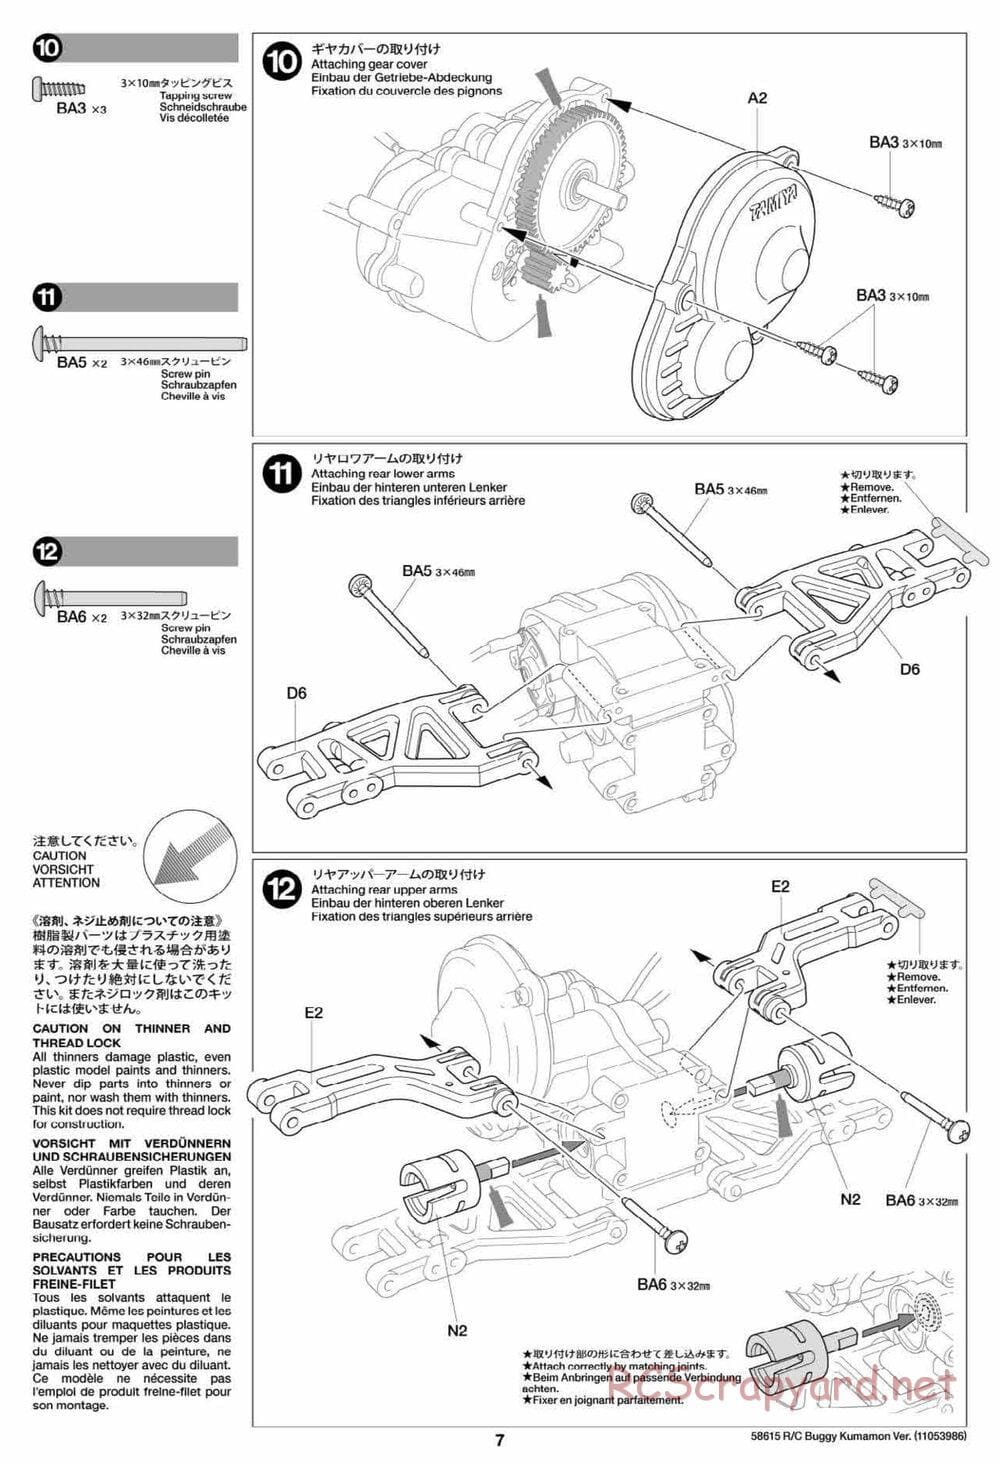 Tamiya - Buggy Kumamon Version Chassis - Manual - Page 7